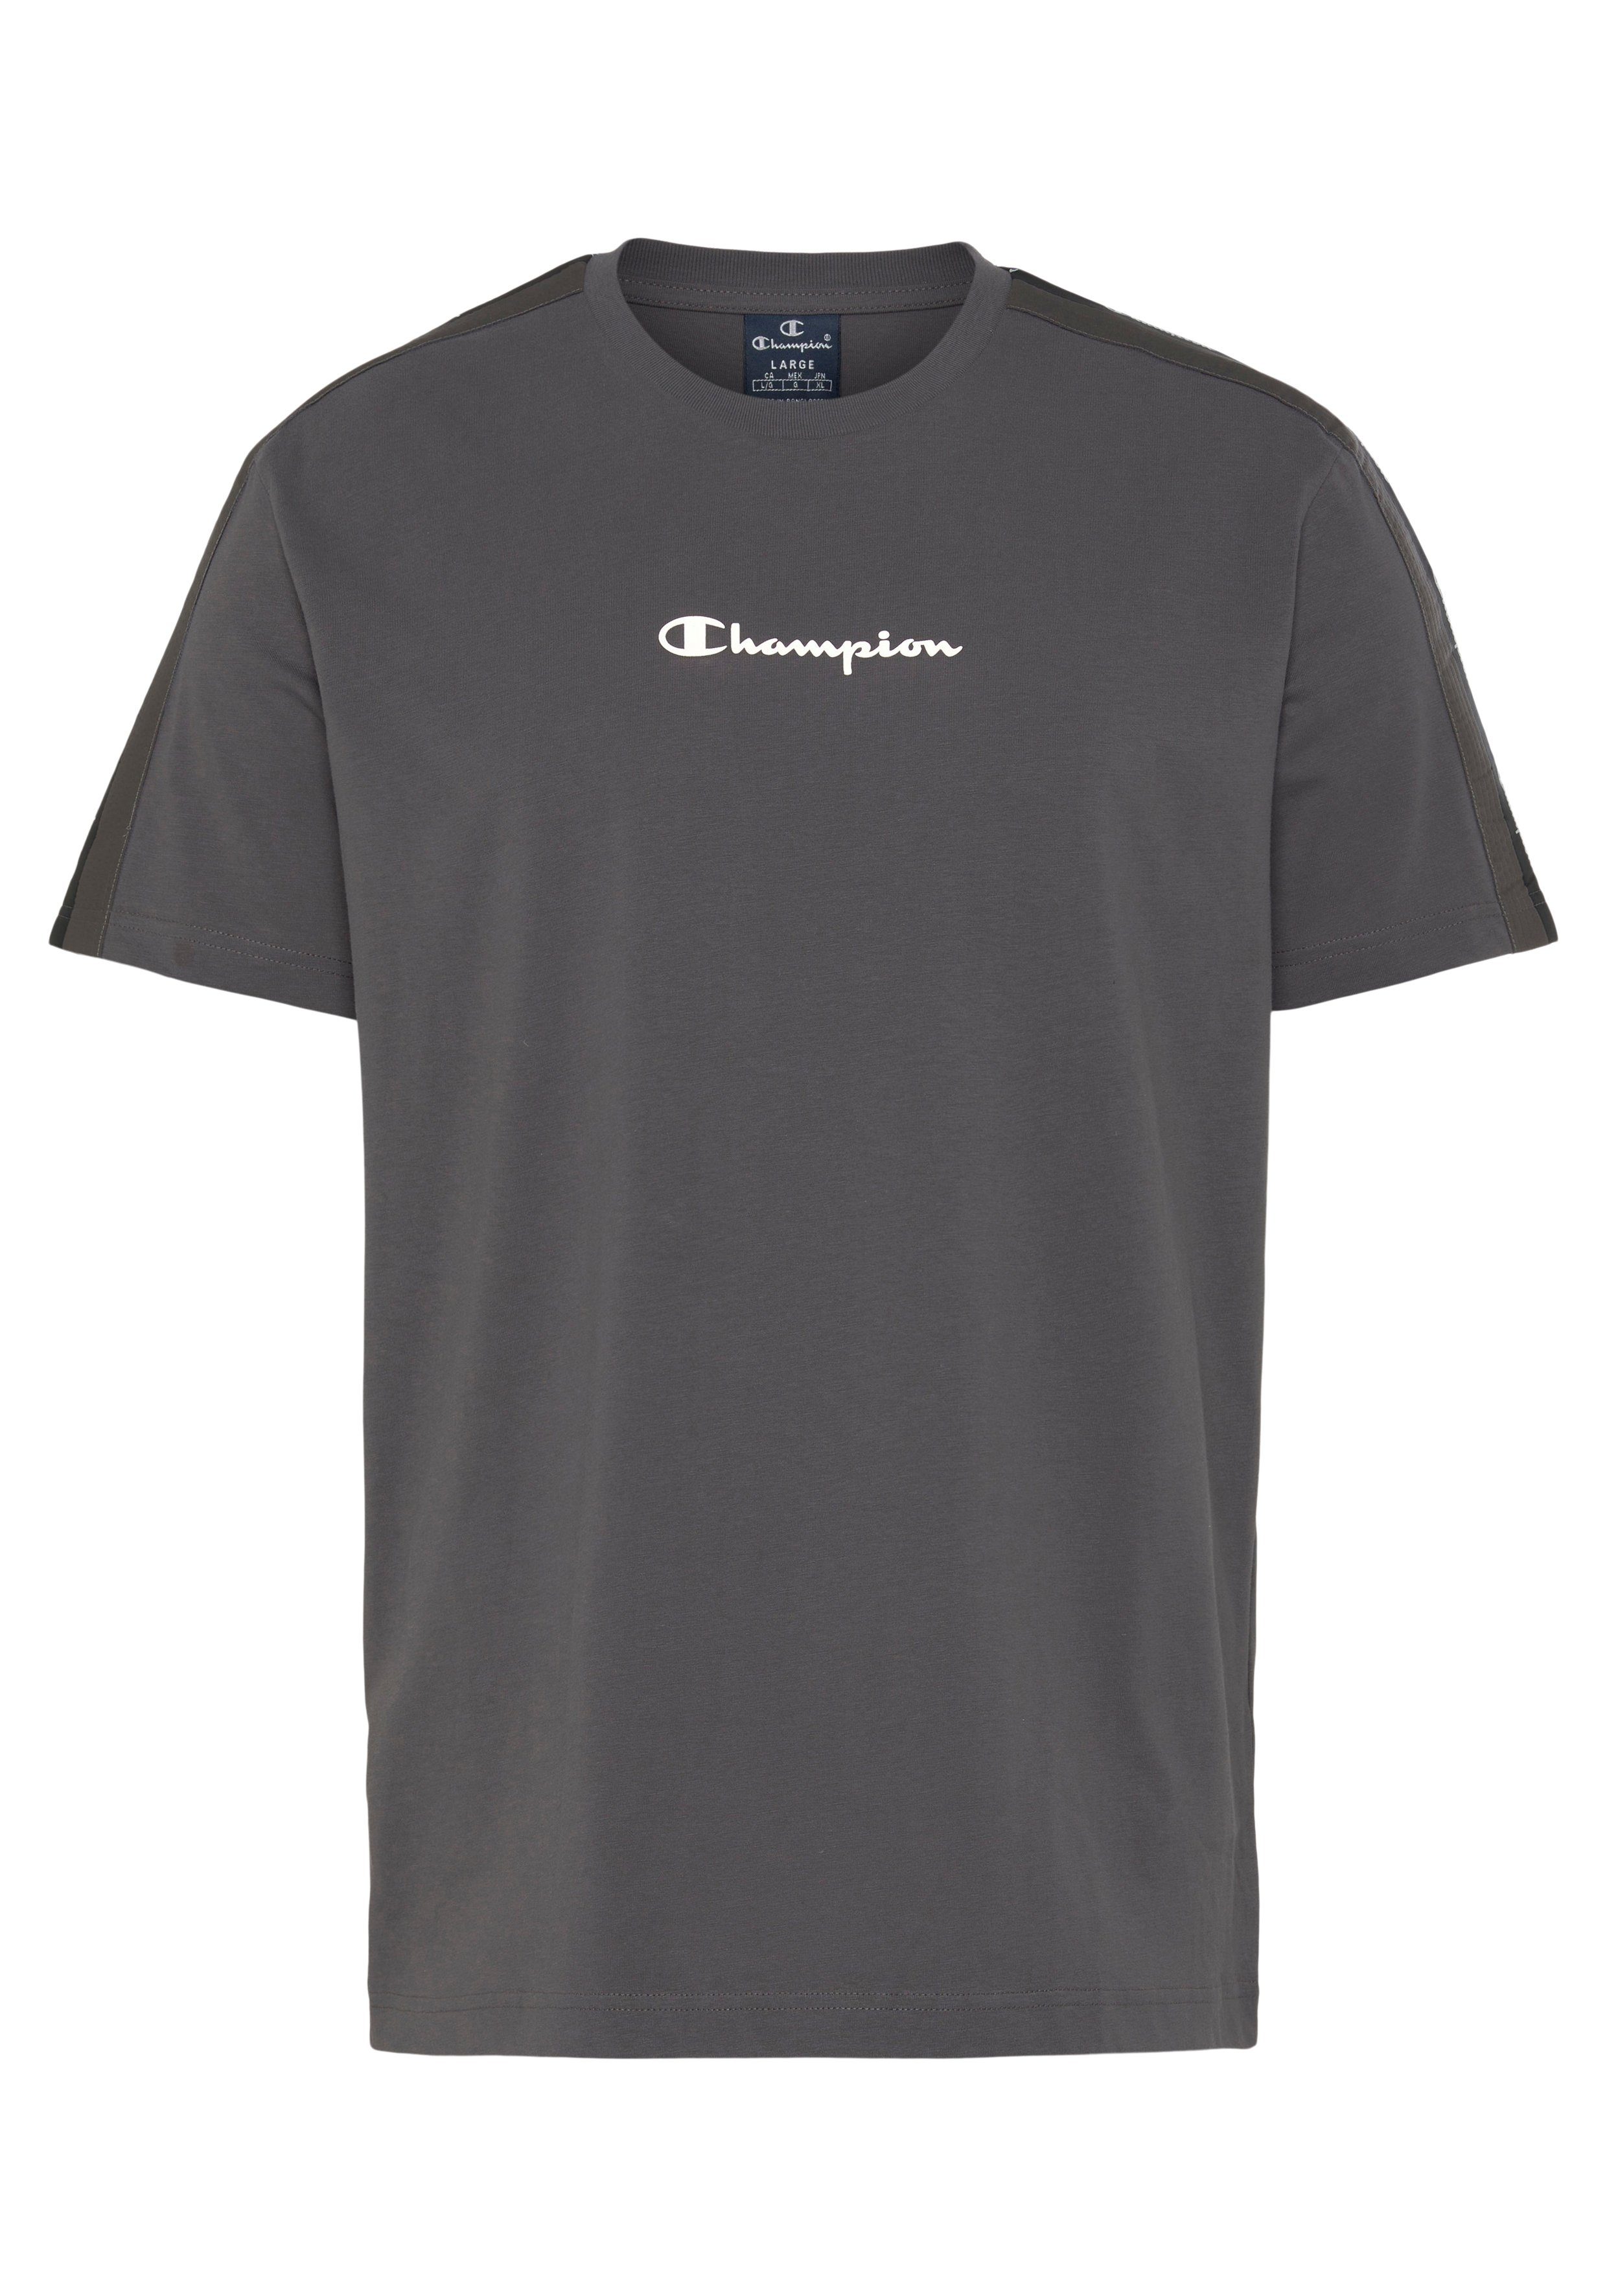 Champion T-Shirt Tape Crewneck grau logo T-Shirt small